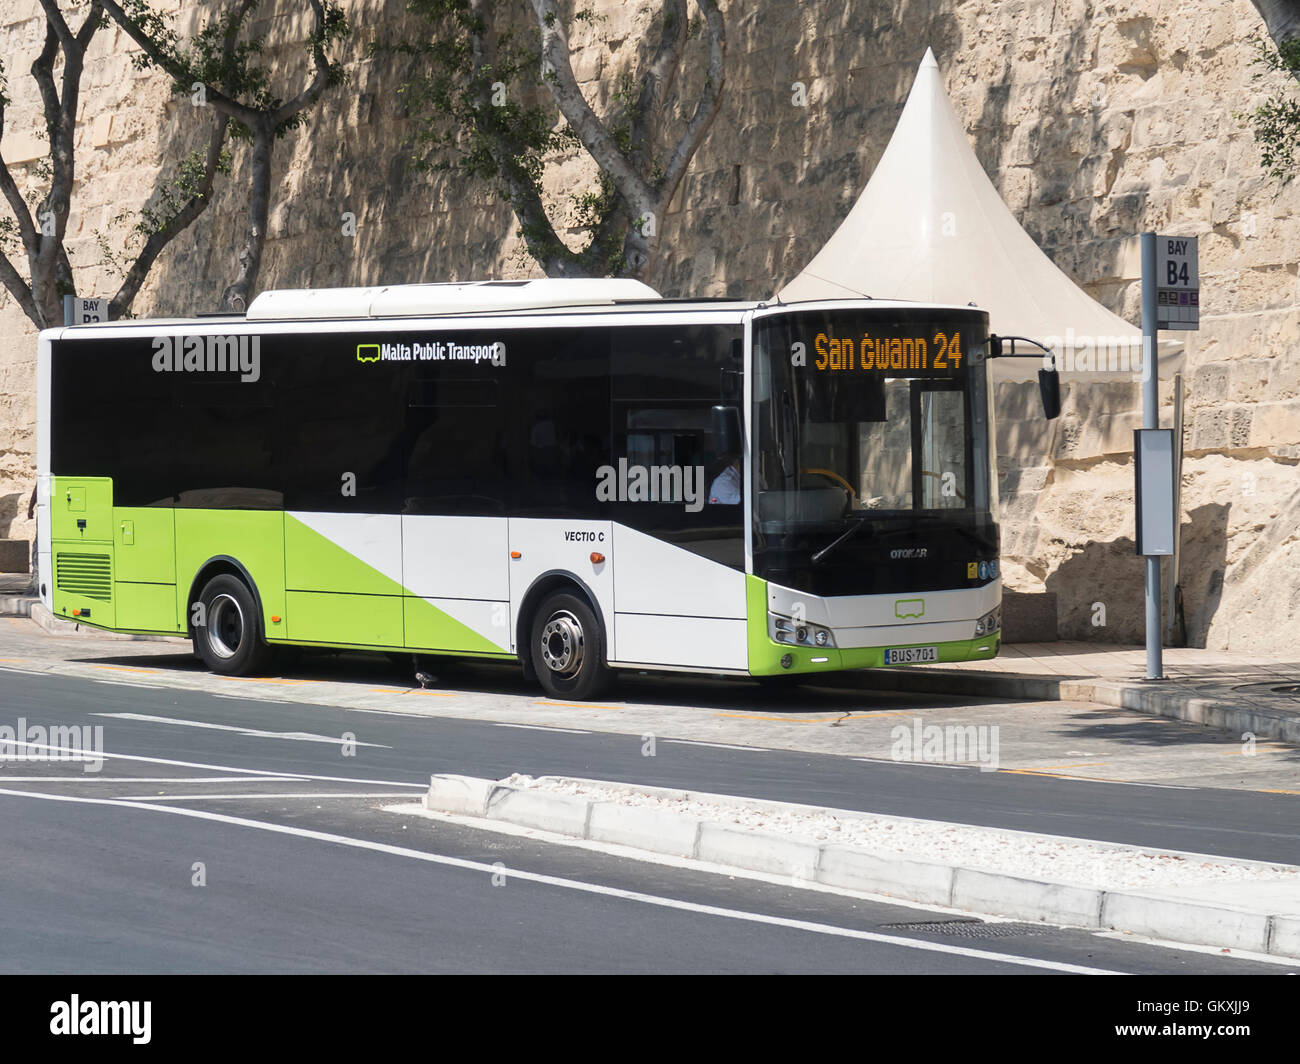 VALLETTA, MALTA - AUGUST 04 2016: Malta Public Transport Bus parked at Bay B4. Stock Photo